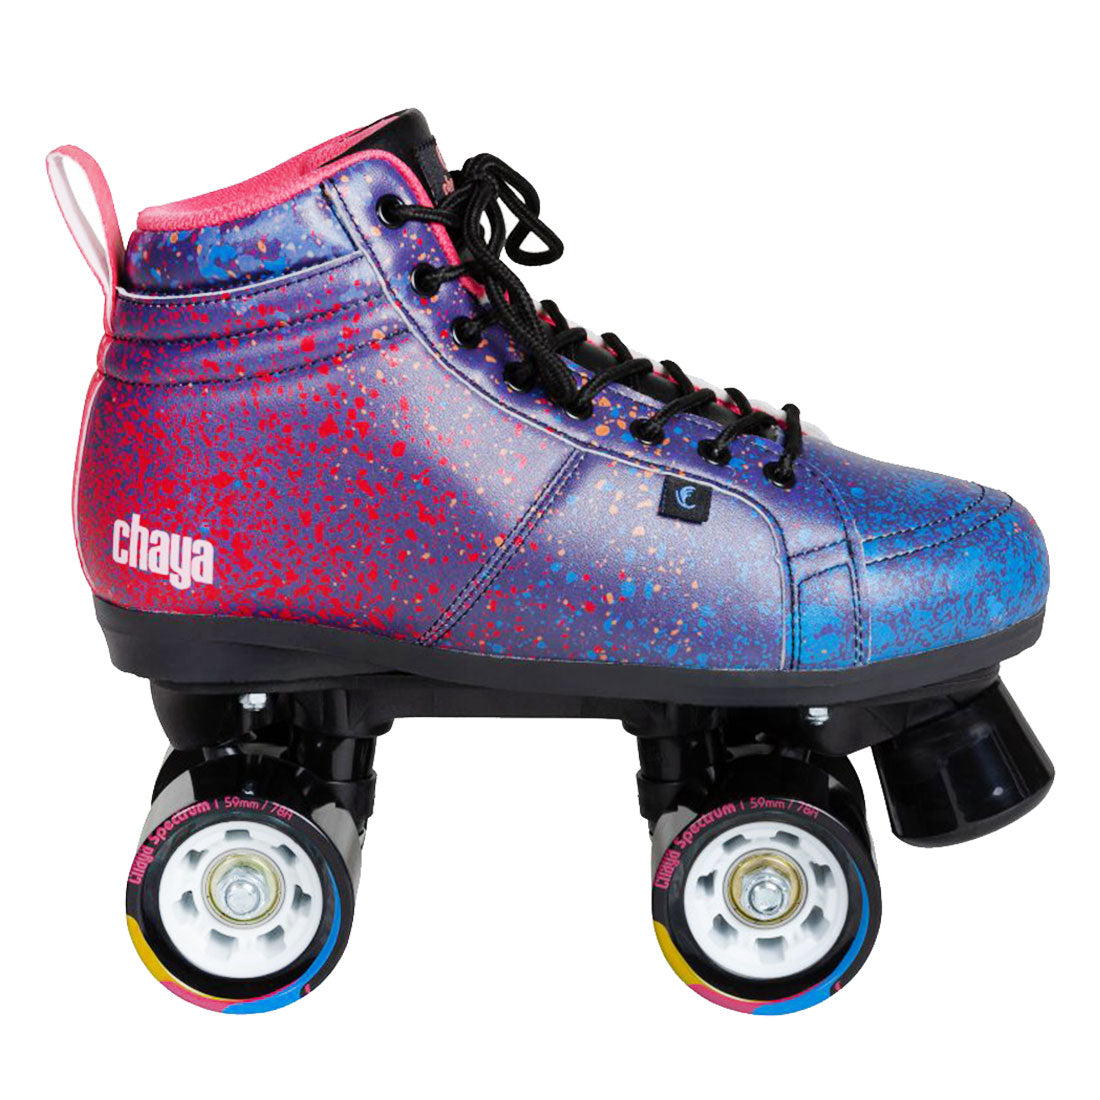 Chaya Vintage Skate - Airbrush Roller Skates